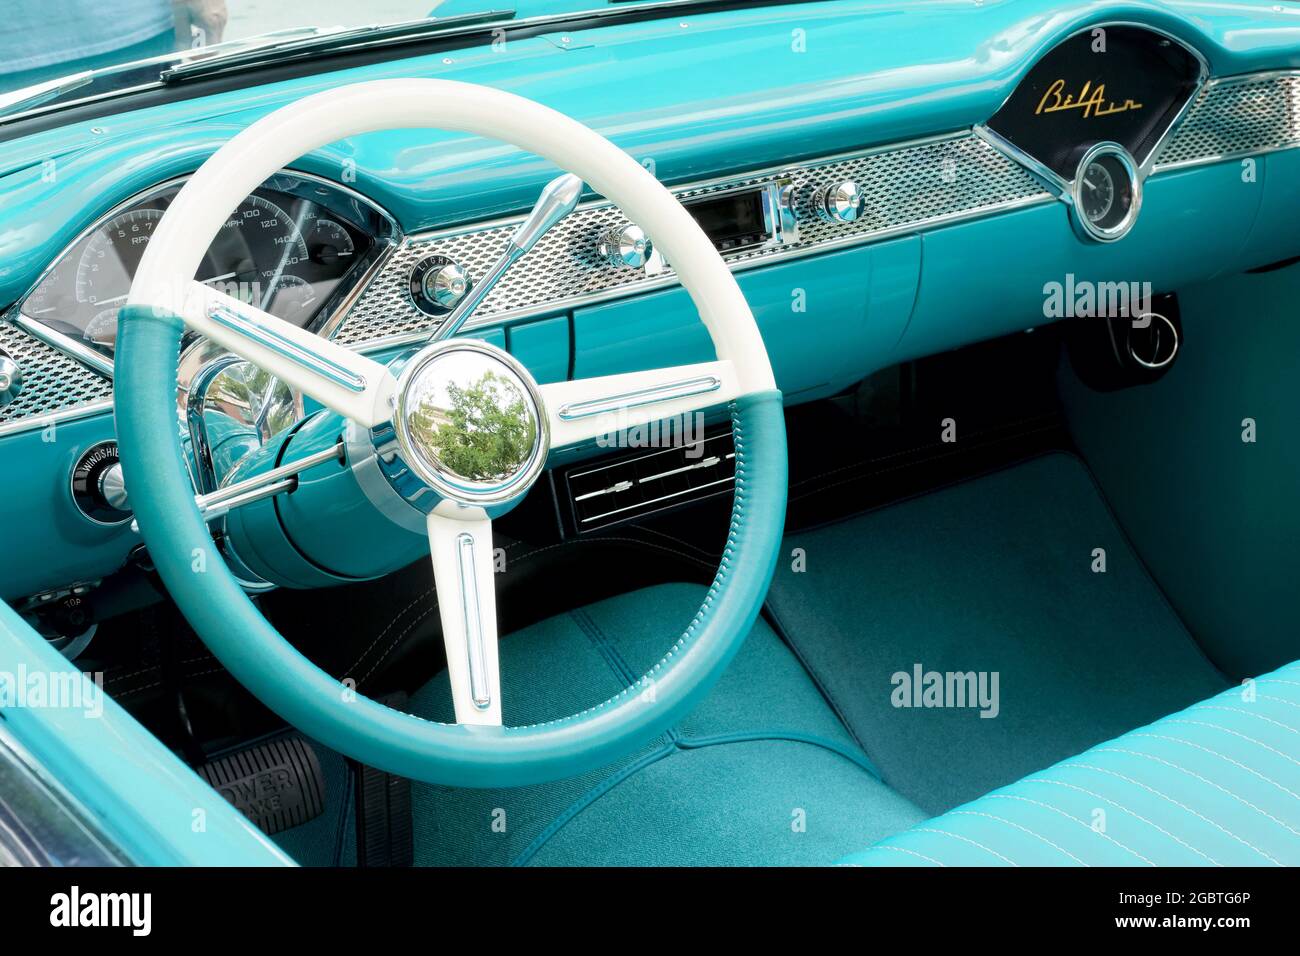 1957 Chevrolet Interior Aqua Stock Photo